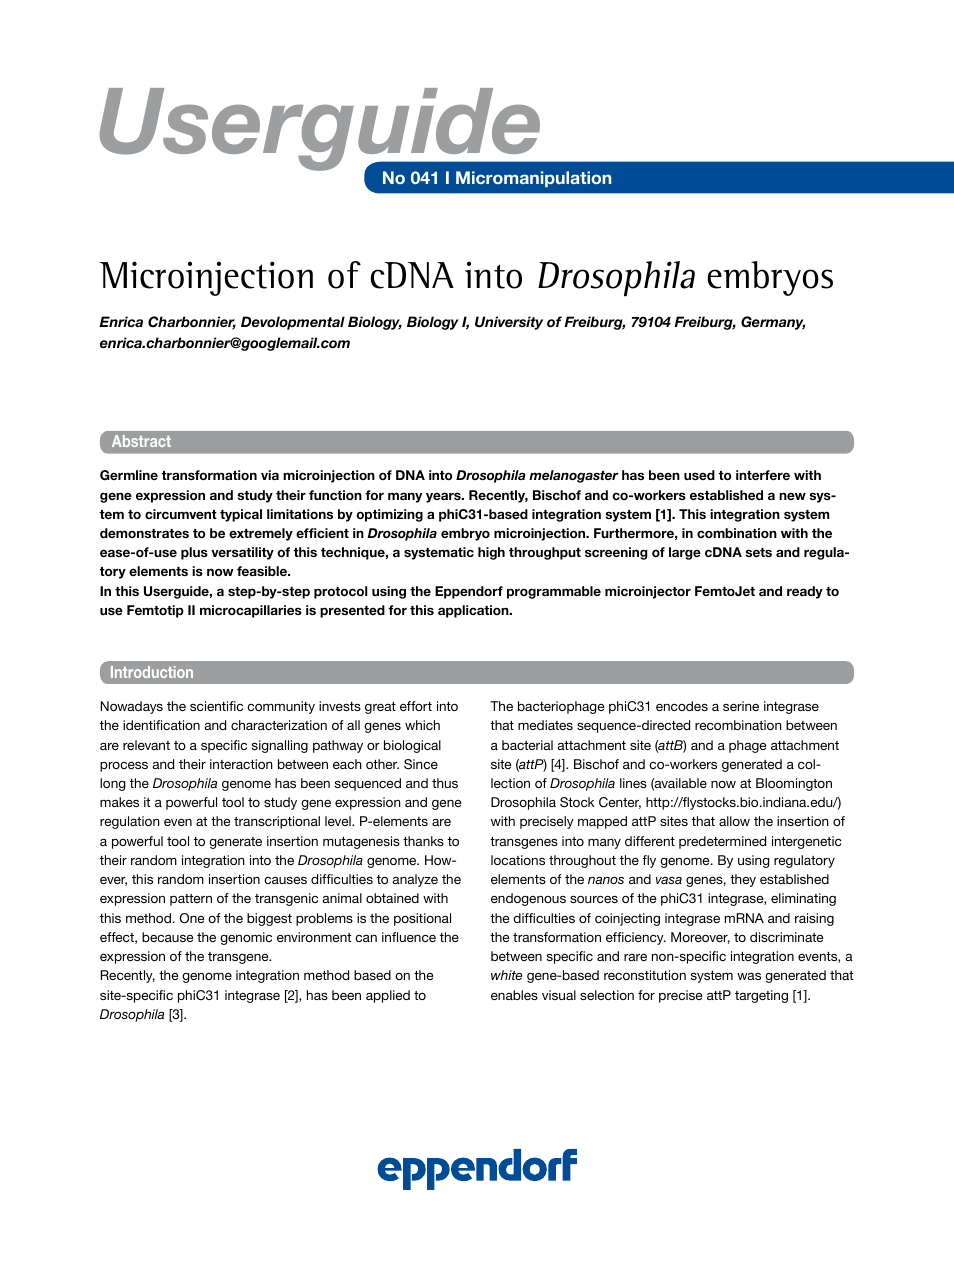 Microinjection of cDNA into Drosophila embryos